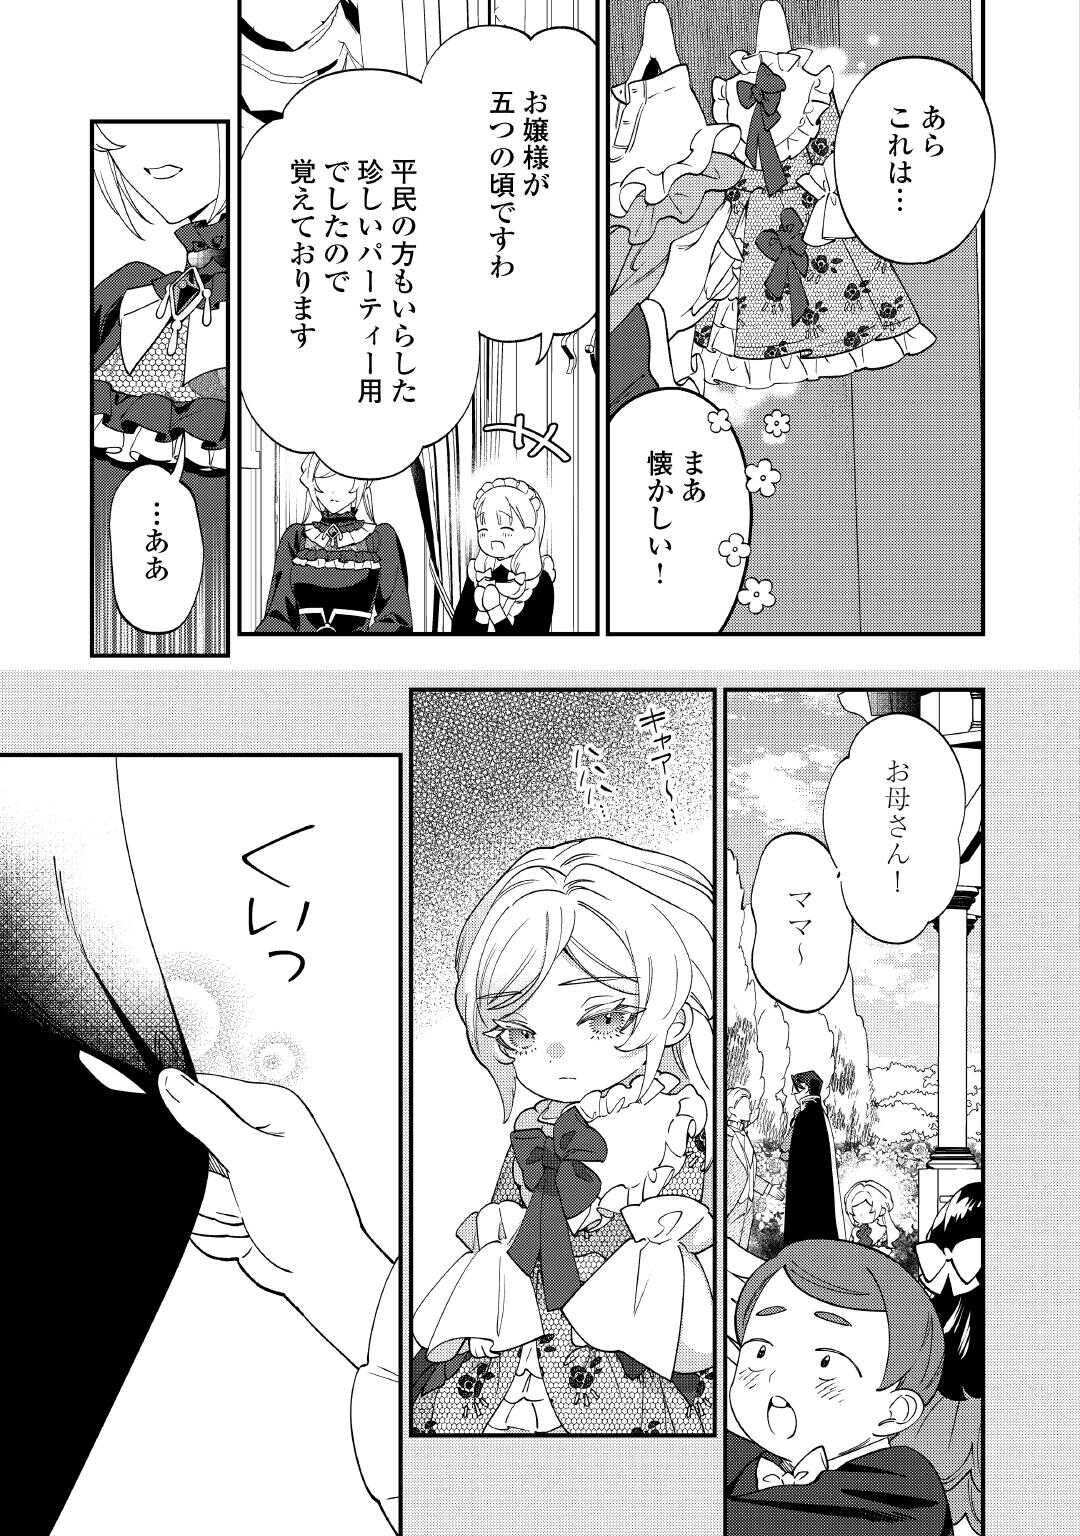 Karei ni Rien shite Misemasuwa! - Chapter 17.5 - Page 4